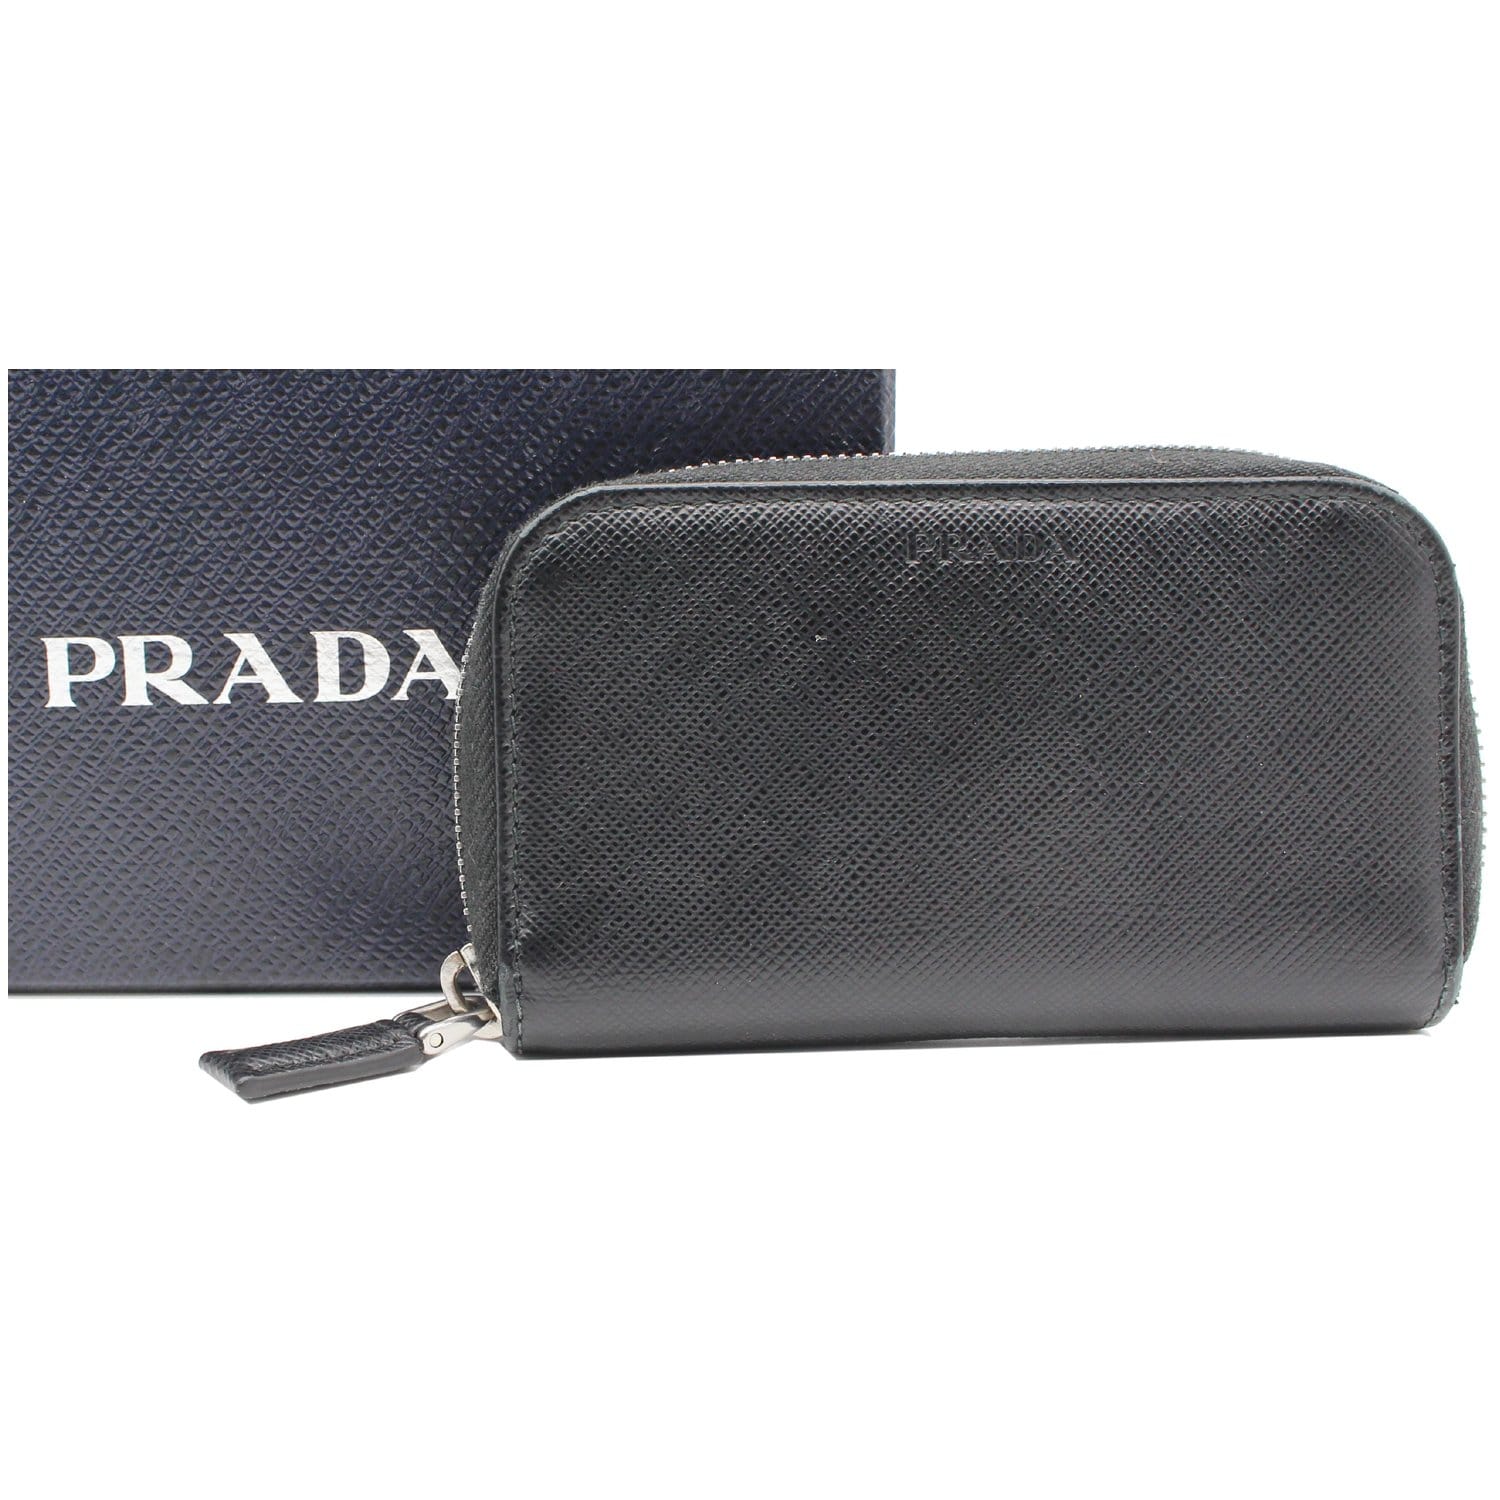 Shop PRADA Saffiano Leather Work Bag Mango by Caterina